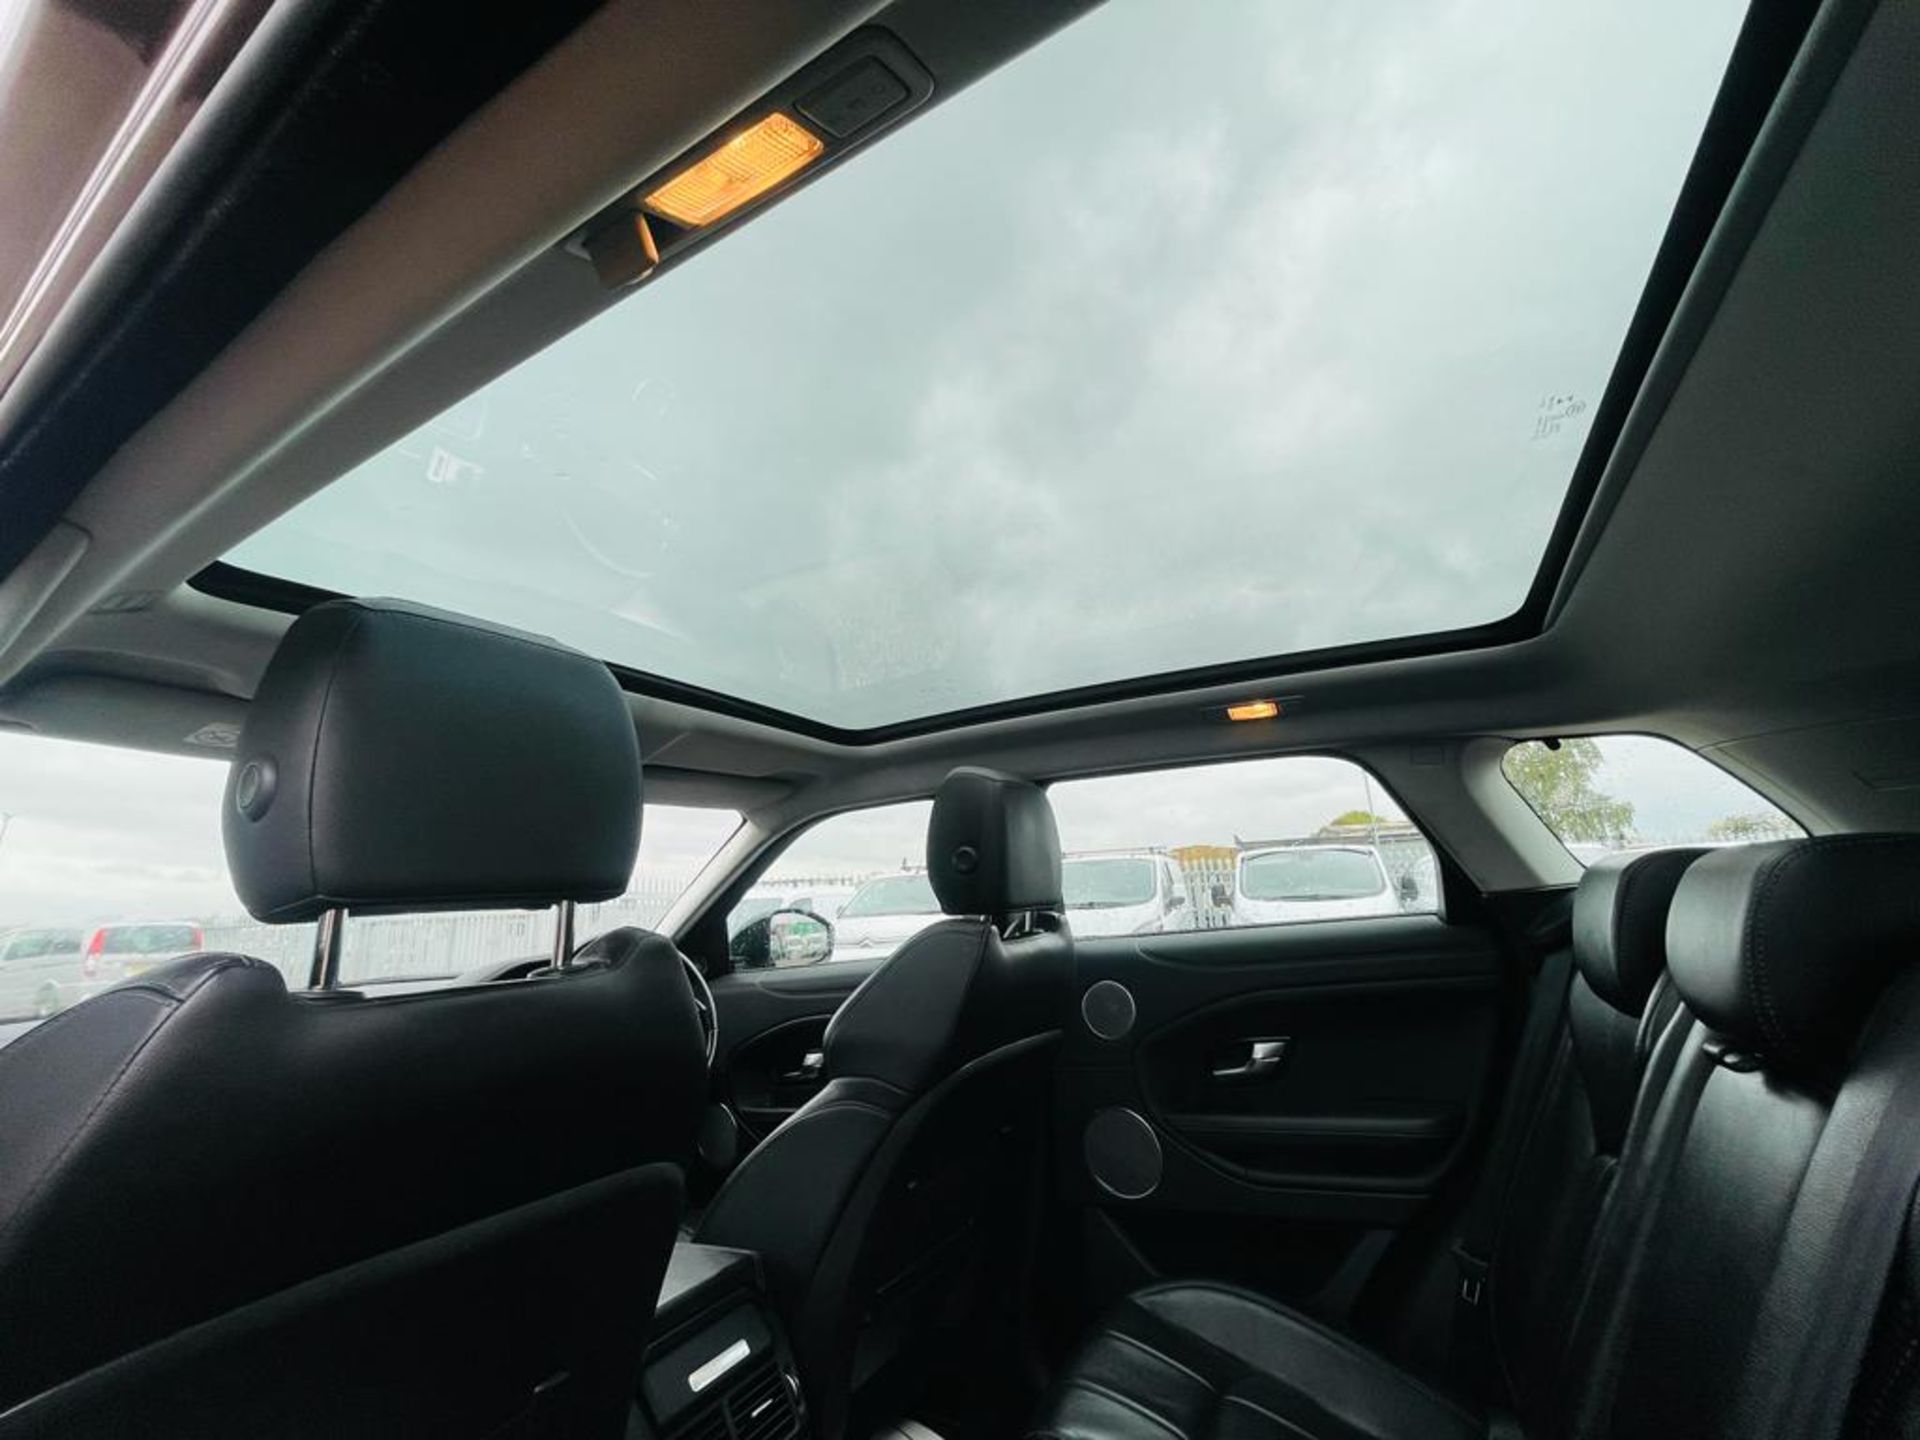 Range Rover Evoque 2.0 ED4 150 SE Tech 2018 '18 Reg' Sat Nav - Panoramic Roof - A/C - Image 12 of 25